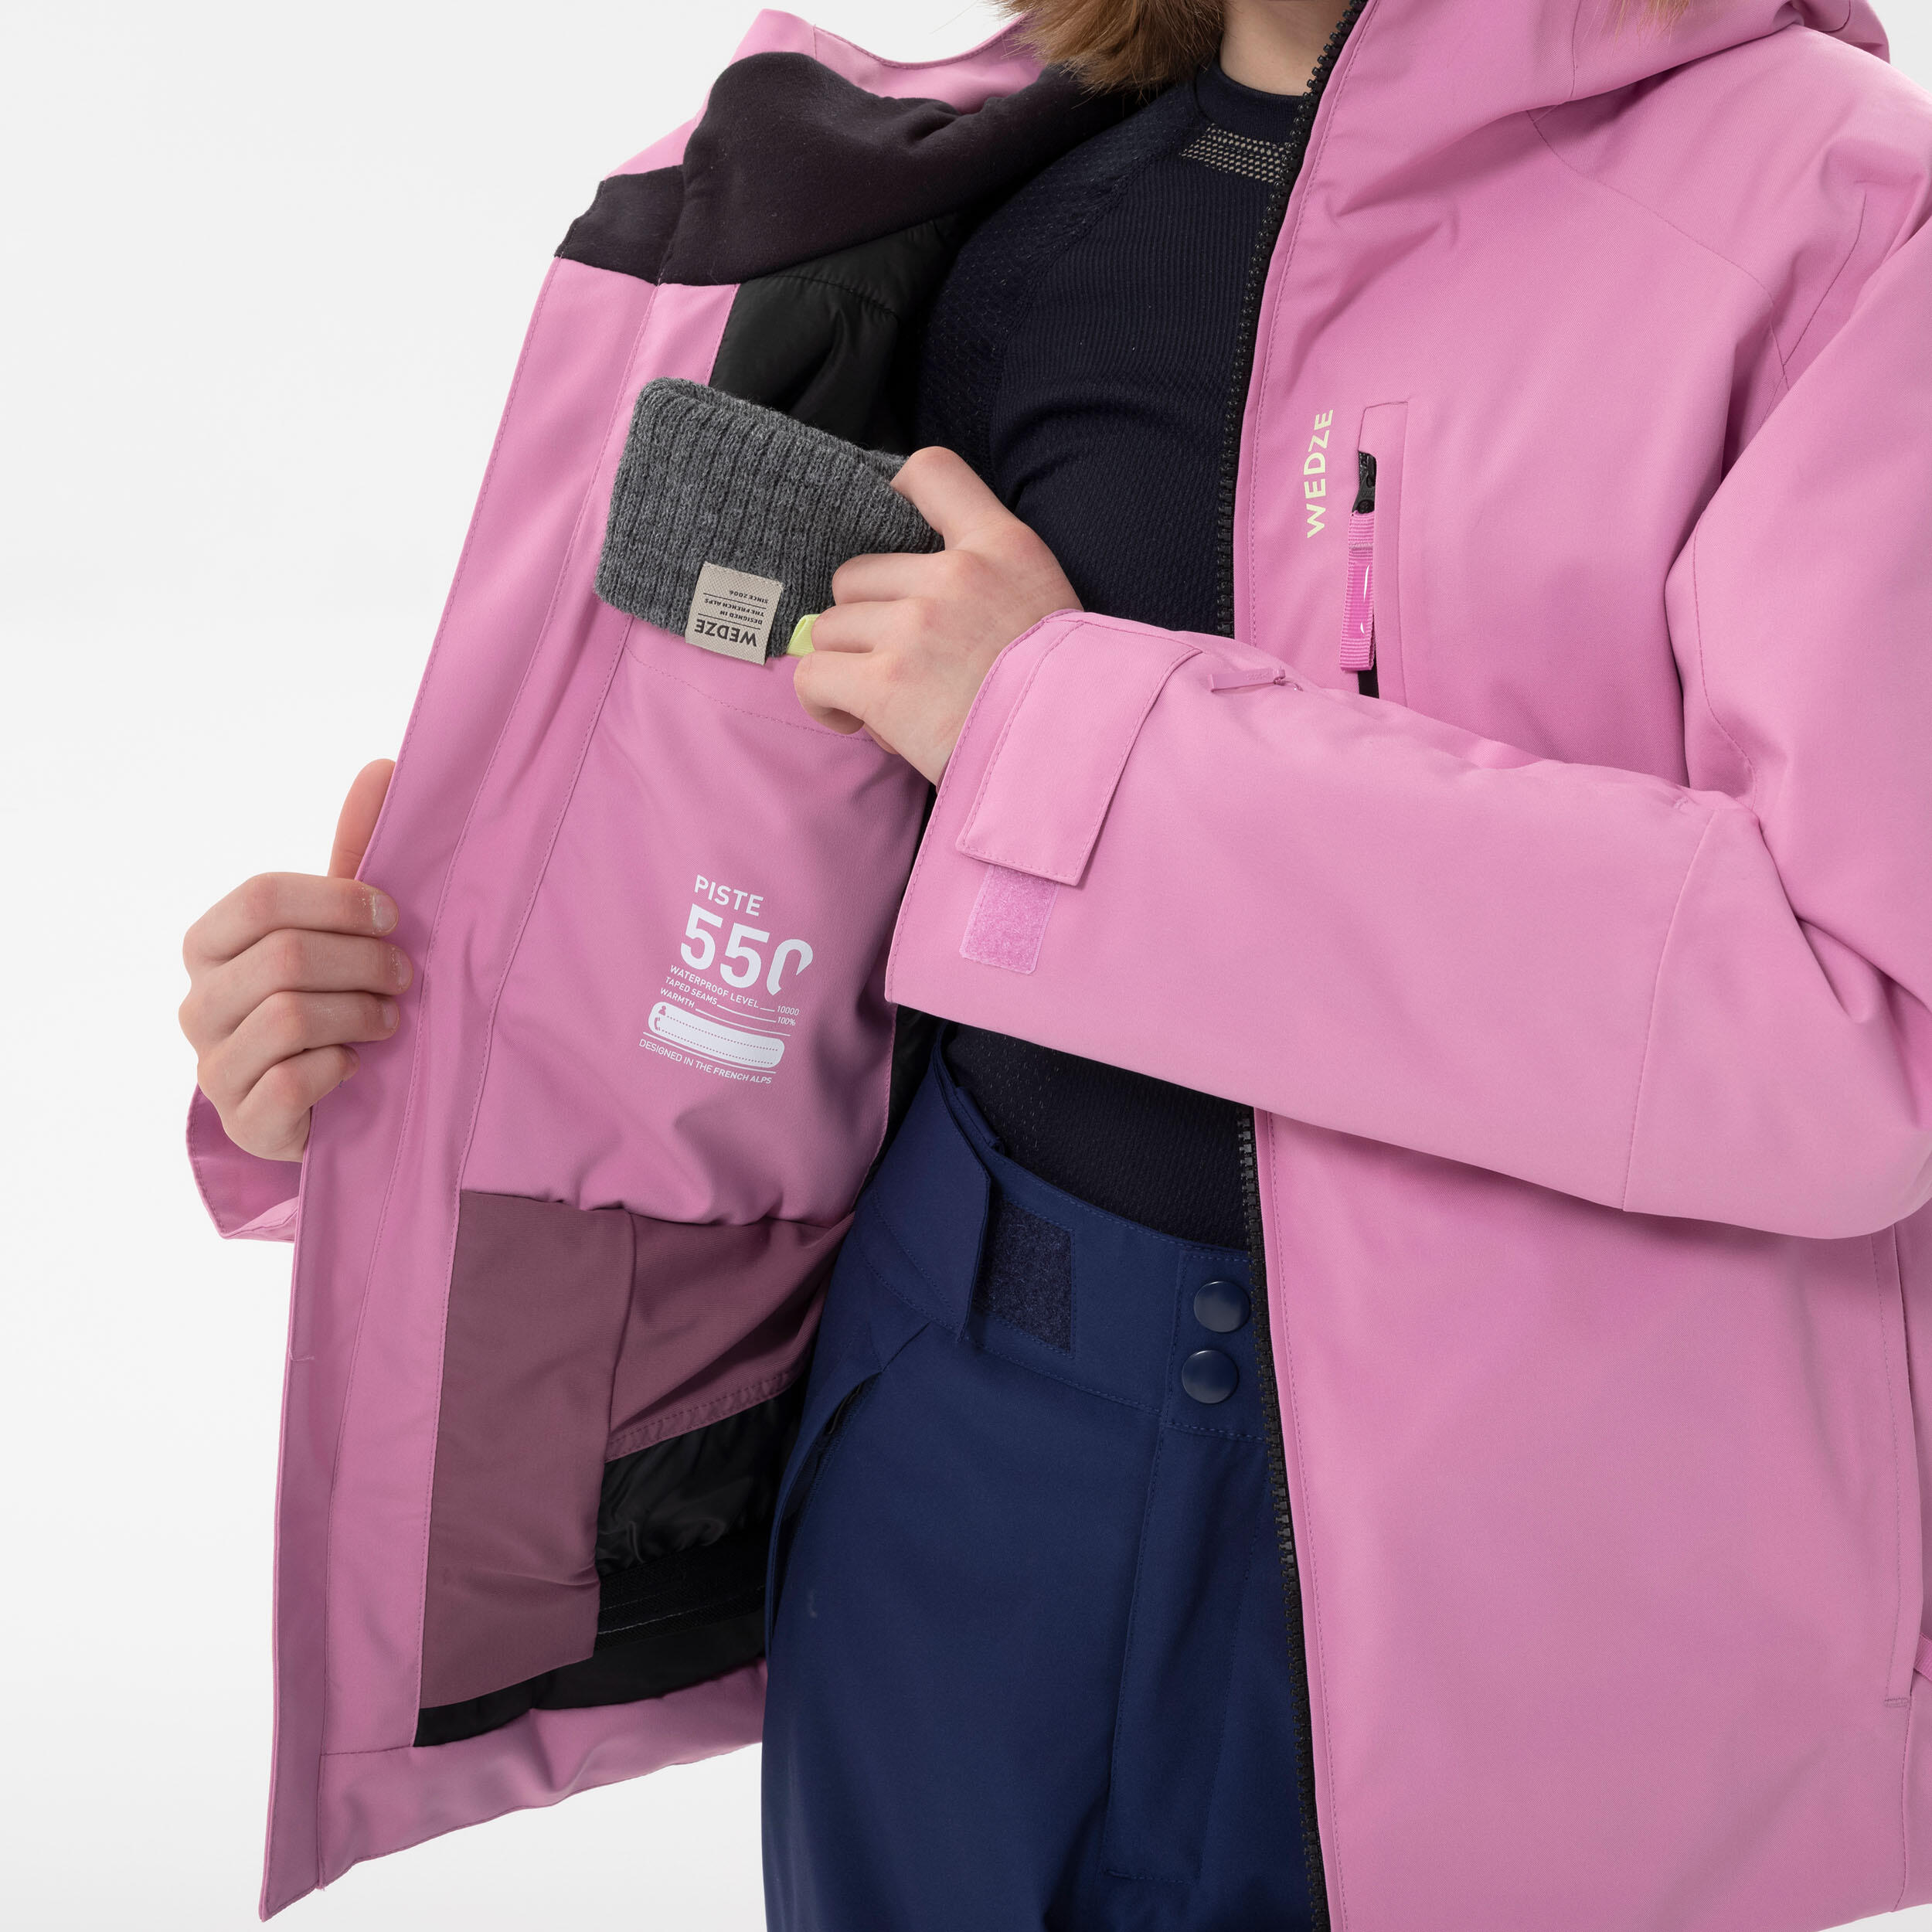 Kids’ Warm and Waterproof Ski Jacket 550 - Pink 7/20